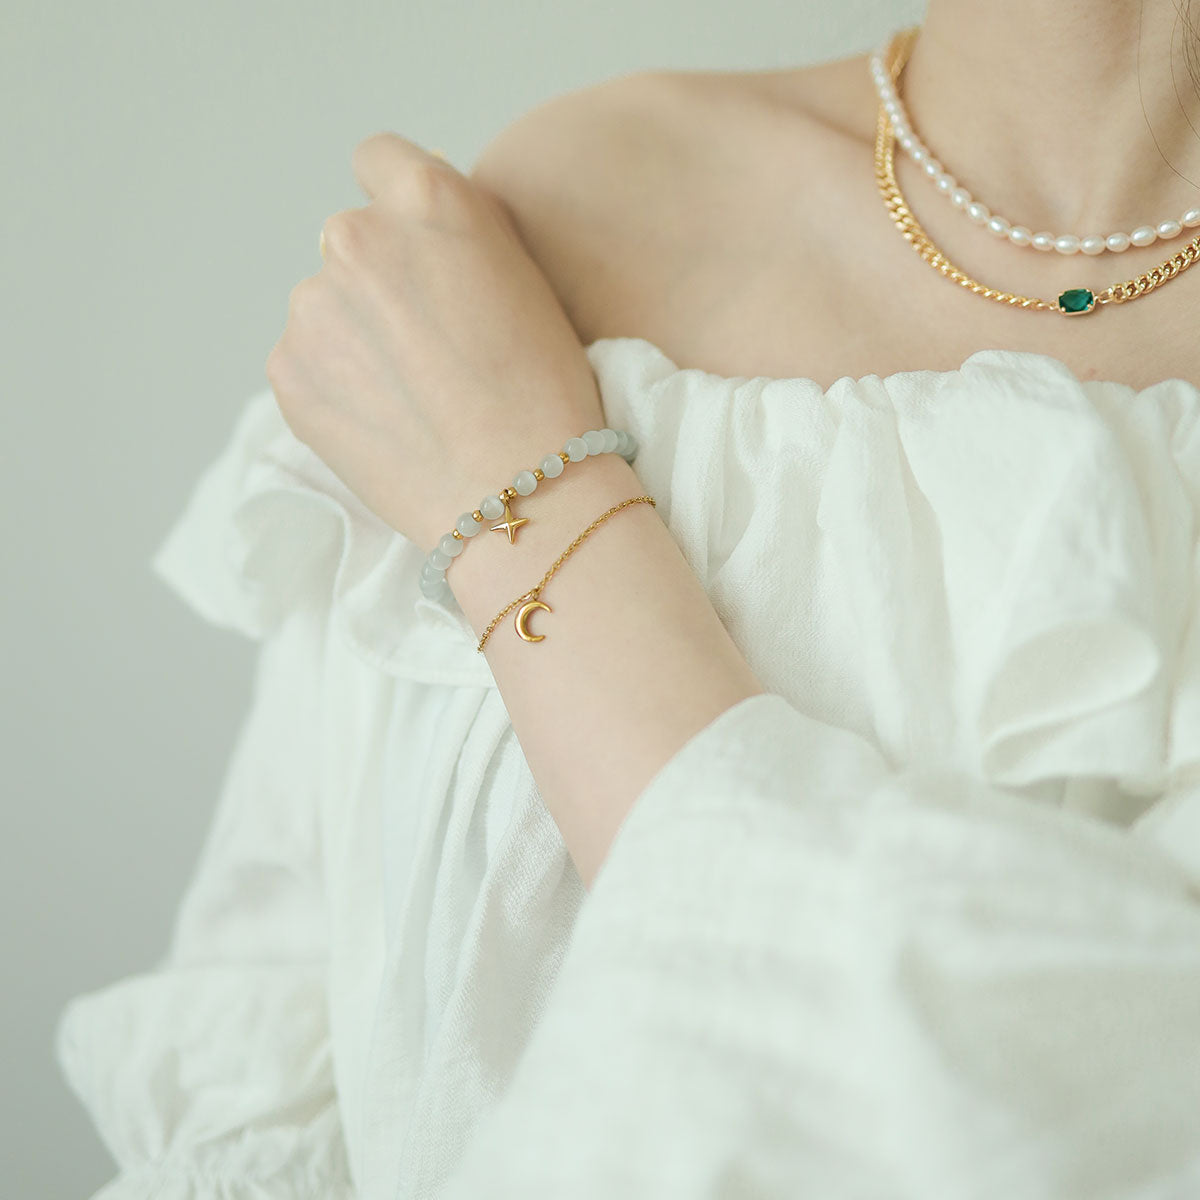 Women wear birthstone charm bracelet and emerald chain necklace.